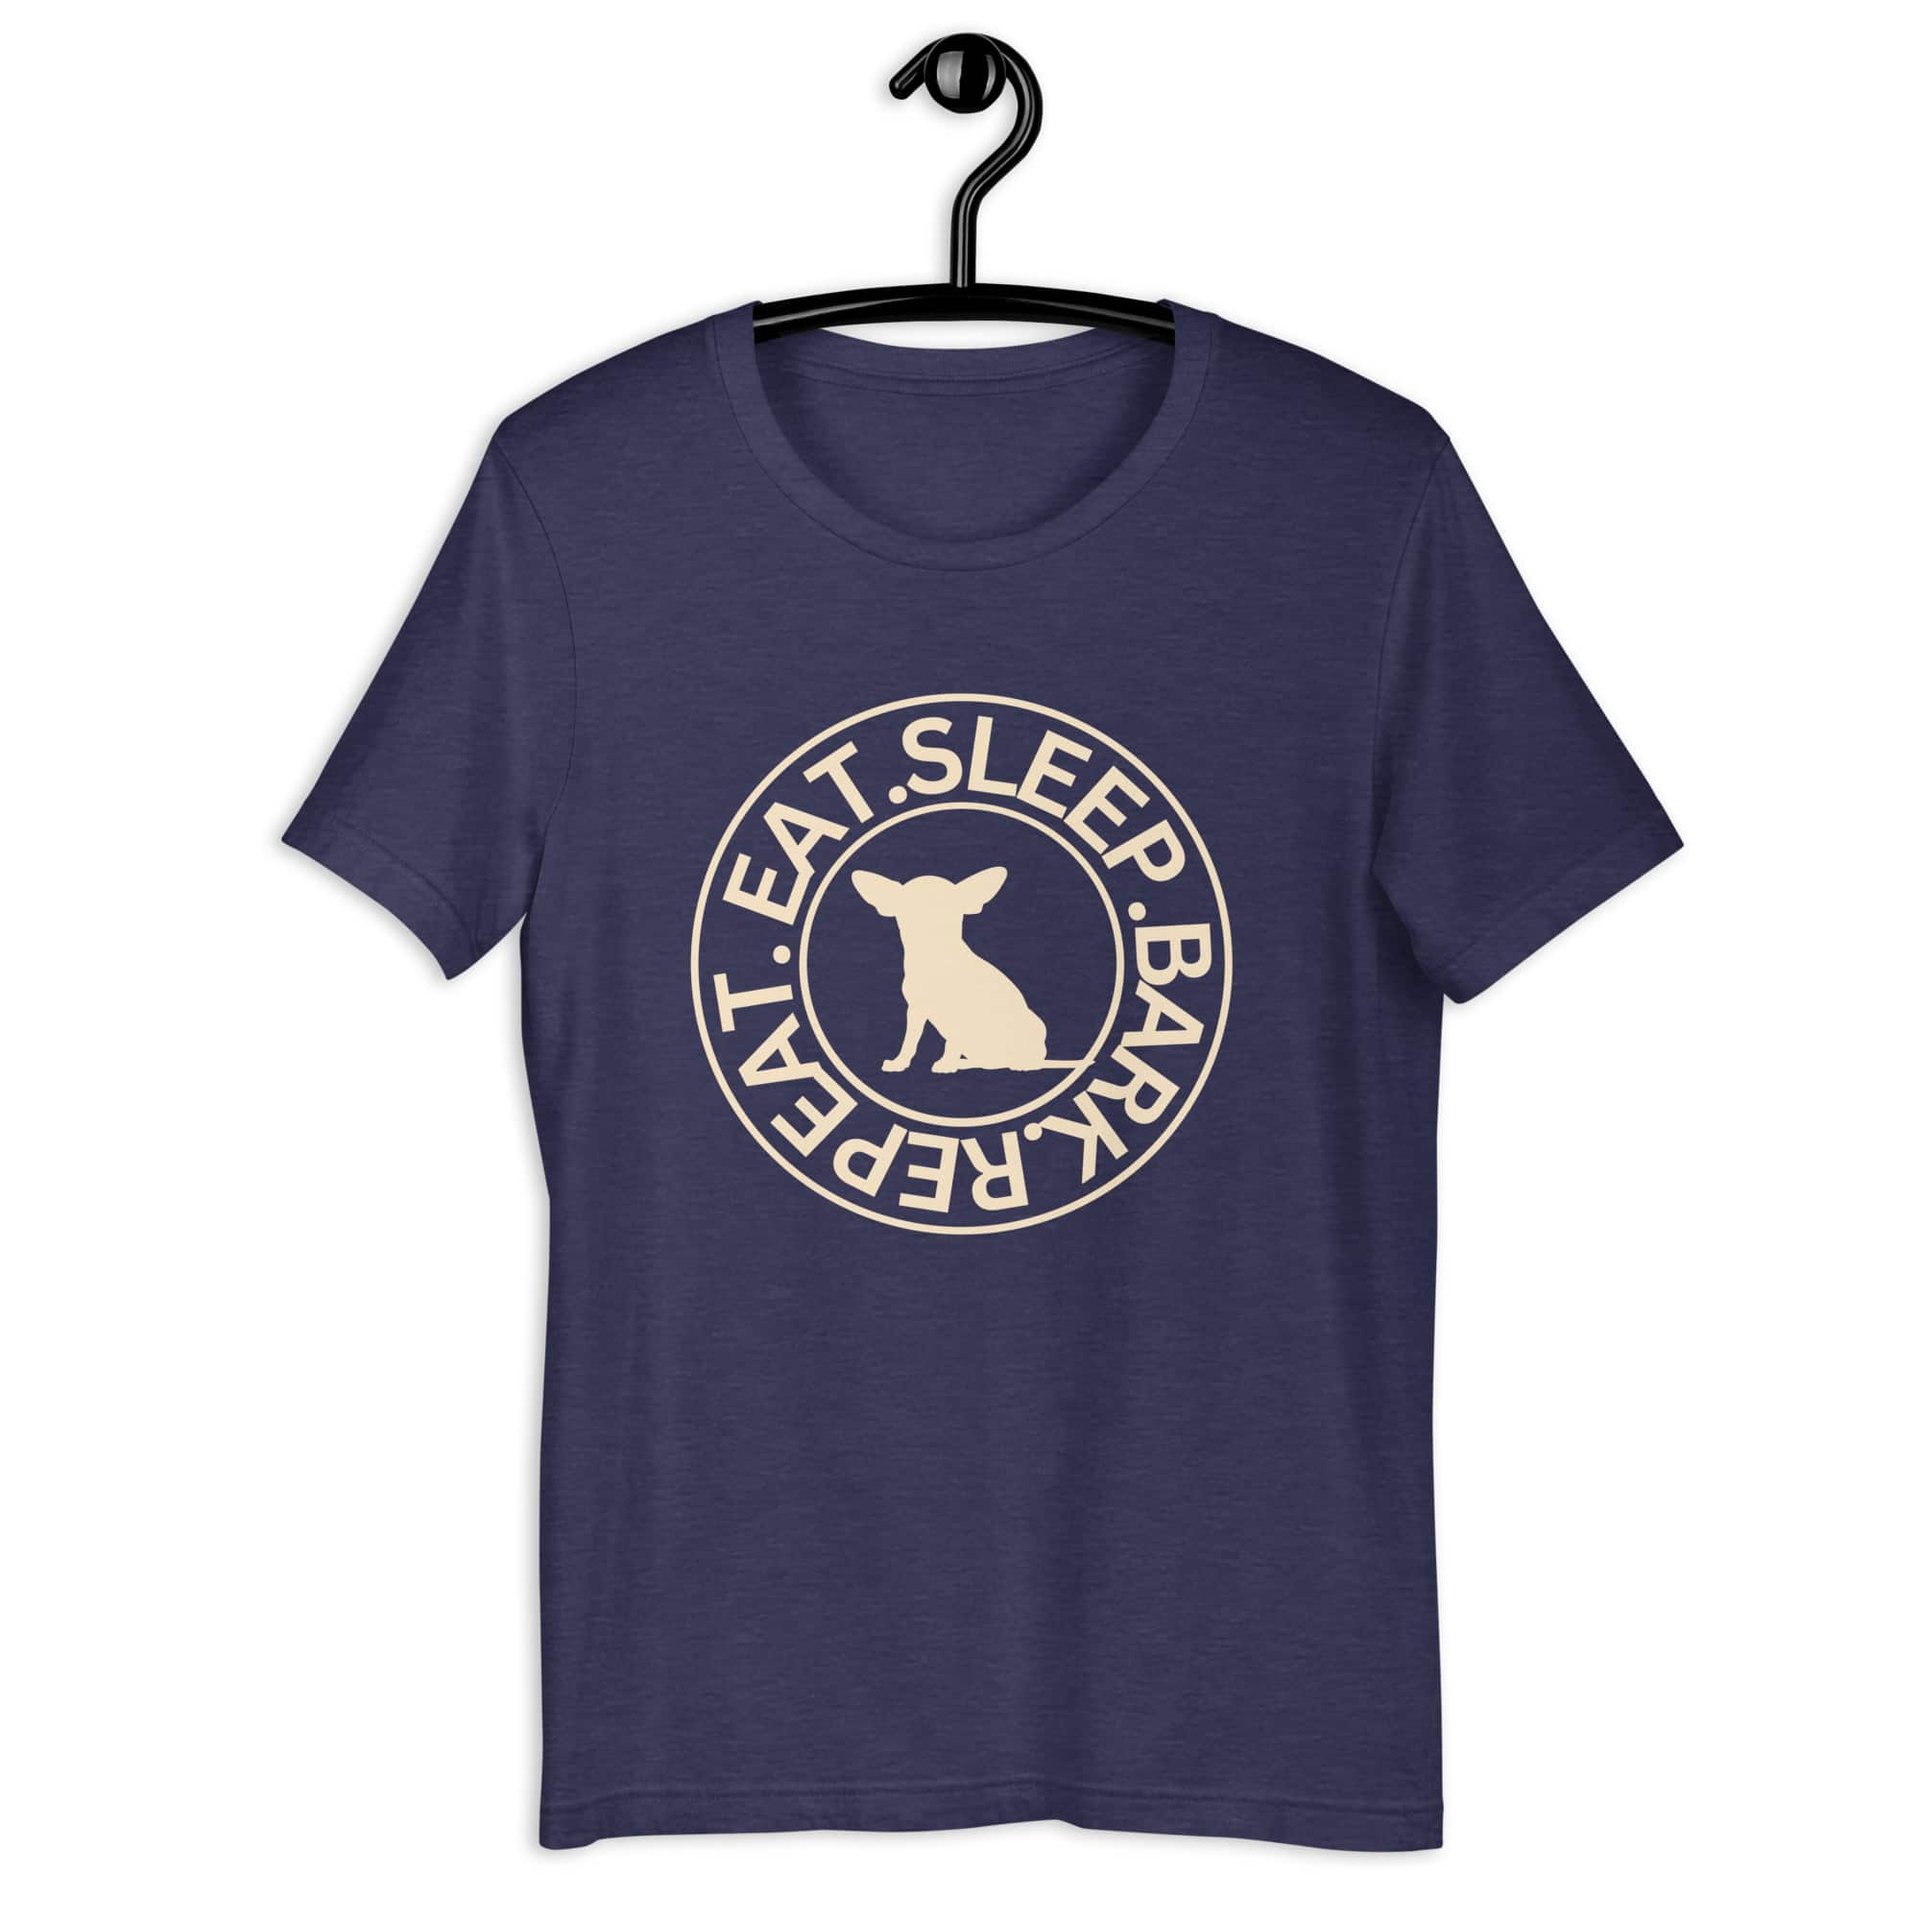 Eat Sleep Bark Repeat Chihuahua Unisex T-Shirt. Heather Midnight Navy